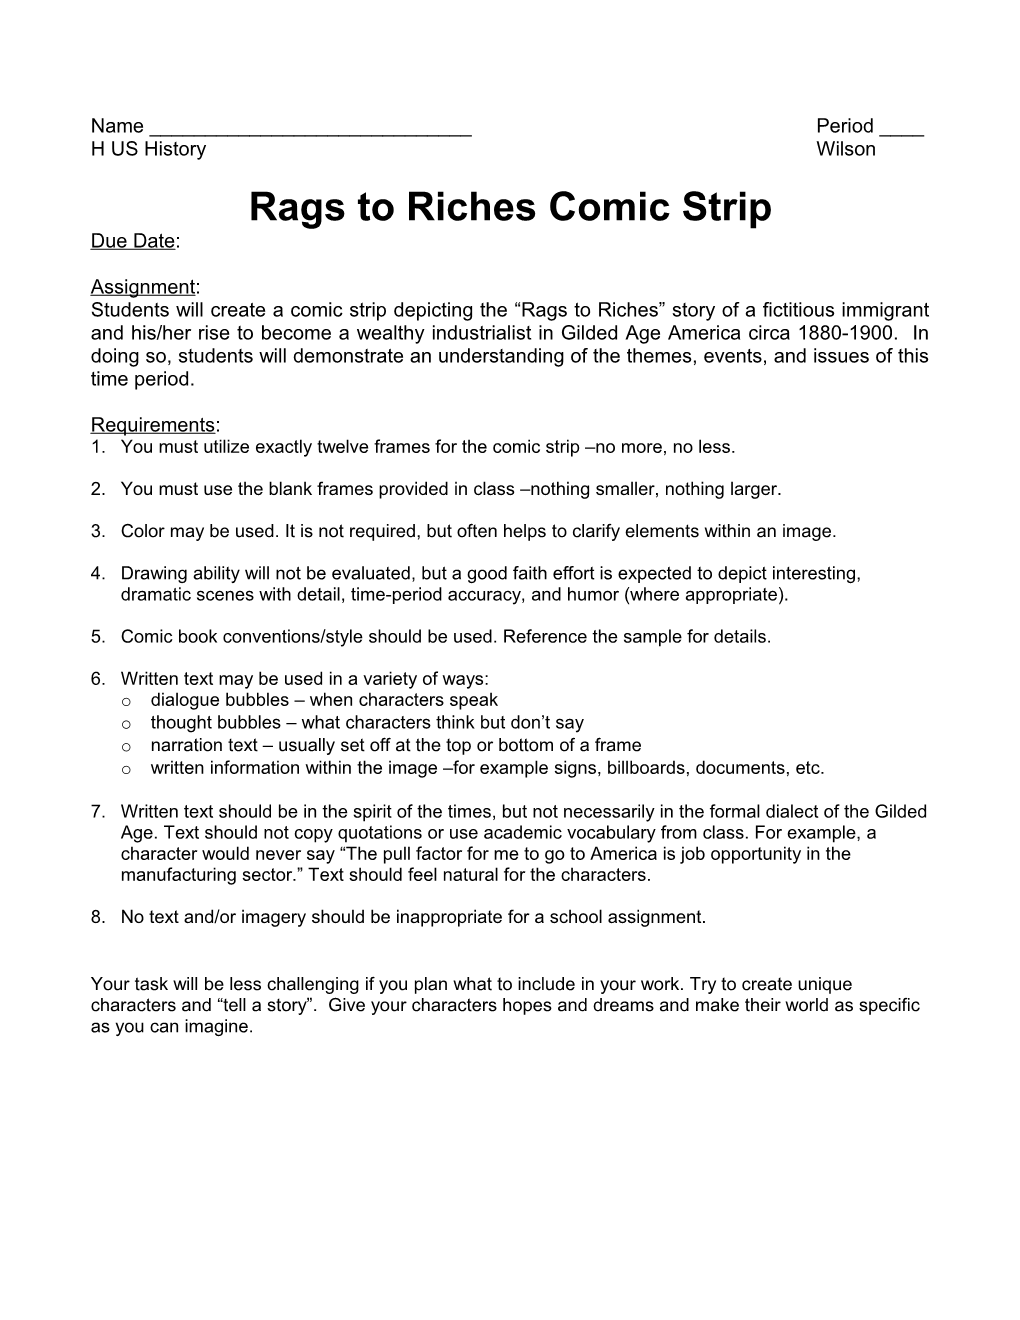 Rags to Riches Comic Strip